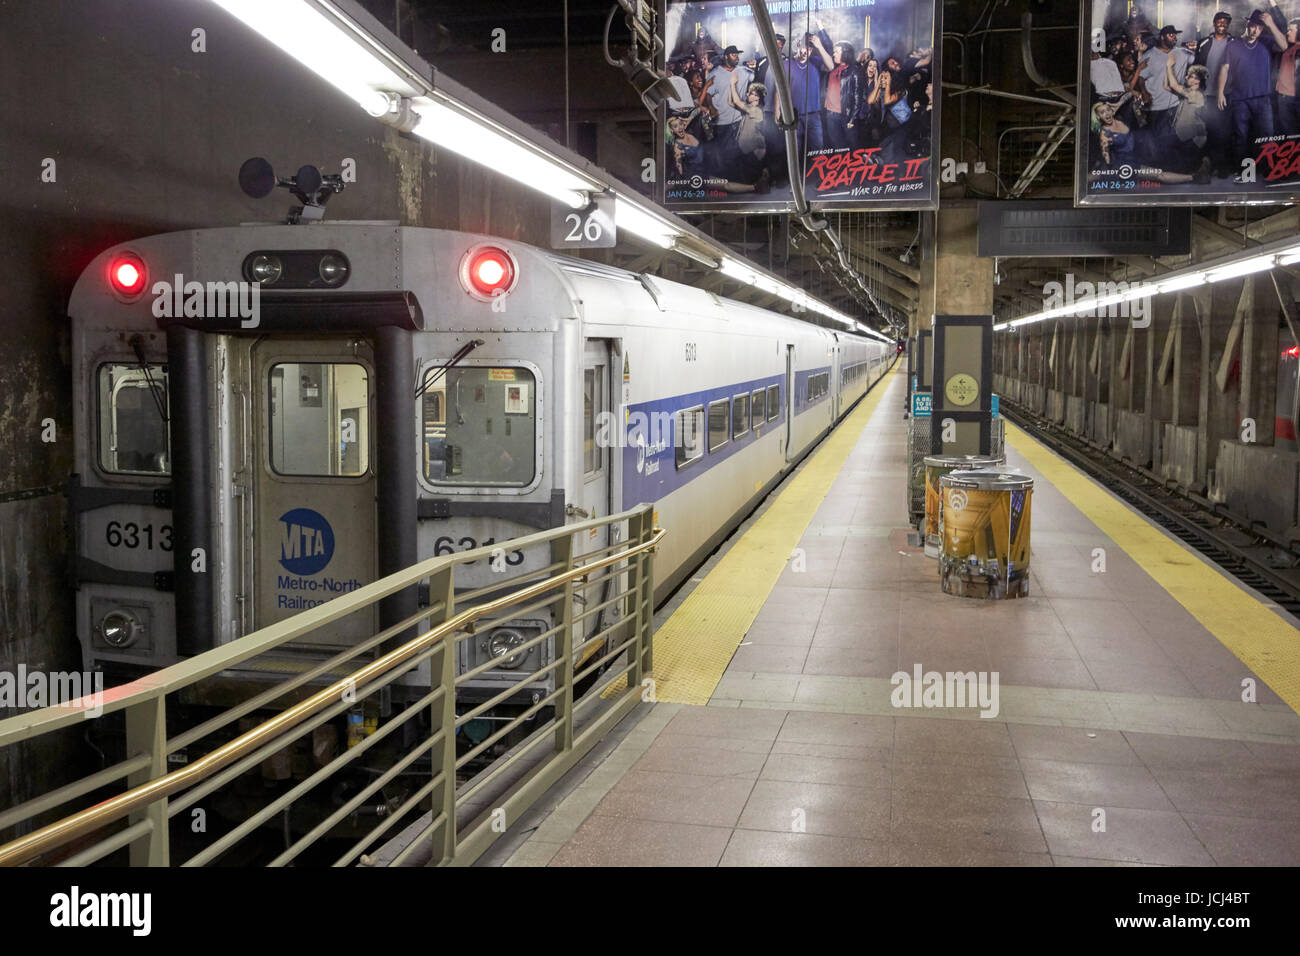 mta metro-north railroad train at underground platform at grand central terminal New York City USA Stock Photo